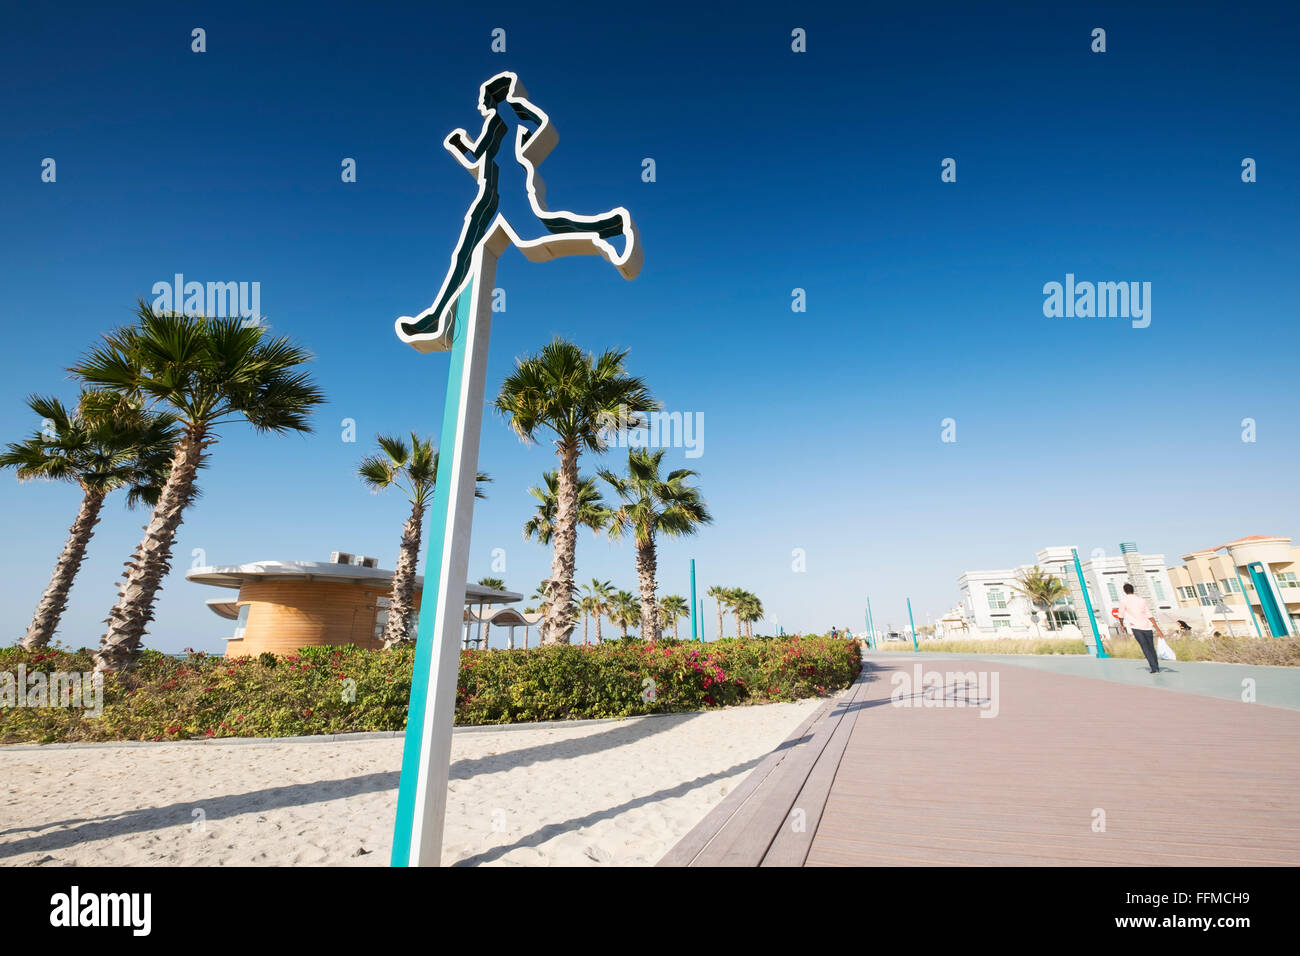 New public boardwalk and jogging track beside beach   in Dubai United Arab Emirates Stock Photo